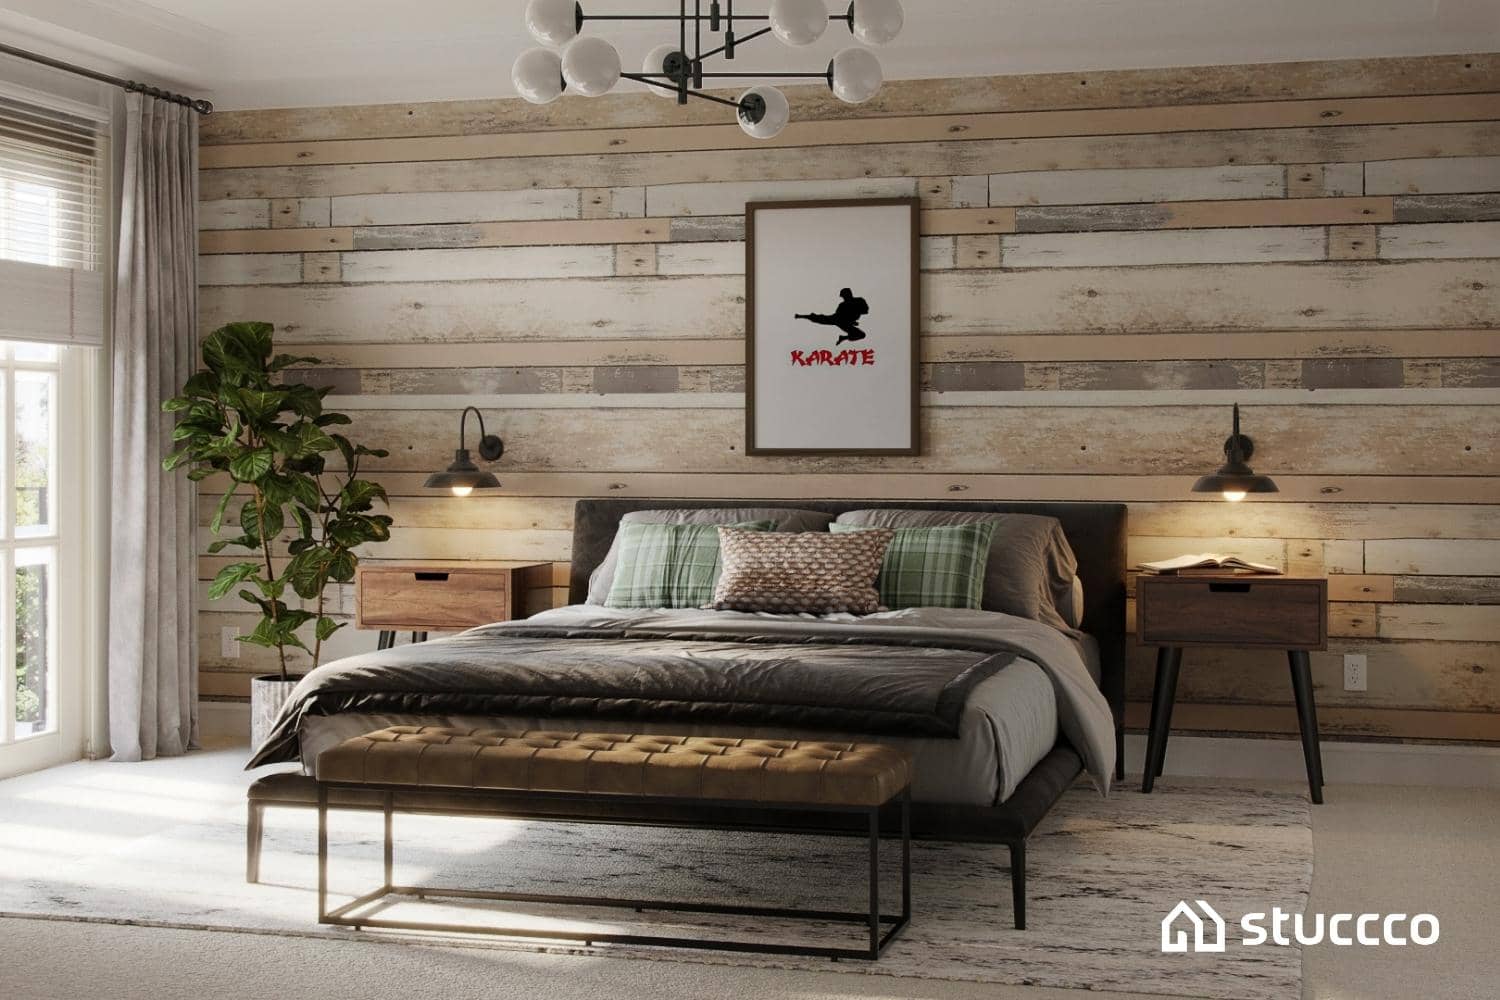 masculine bedroom design from Stuccco online interior design